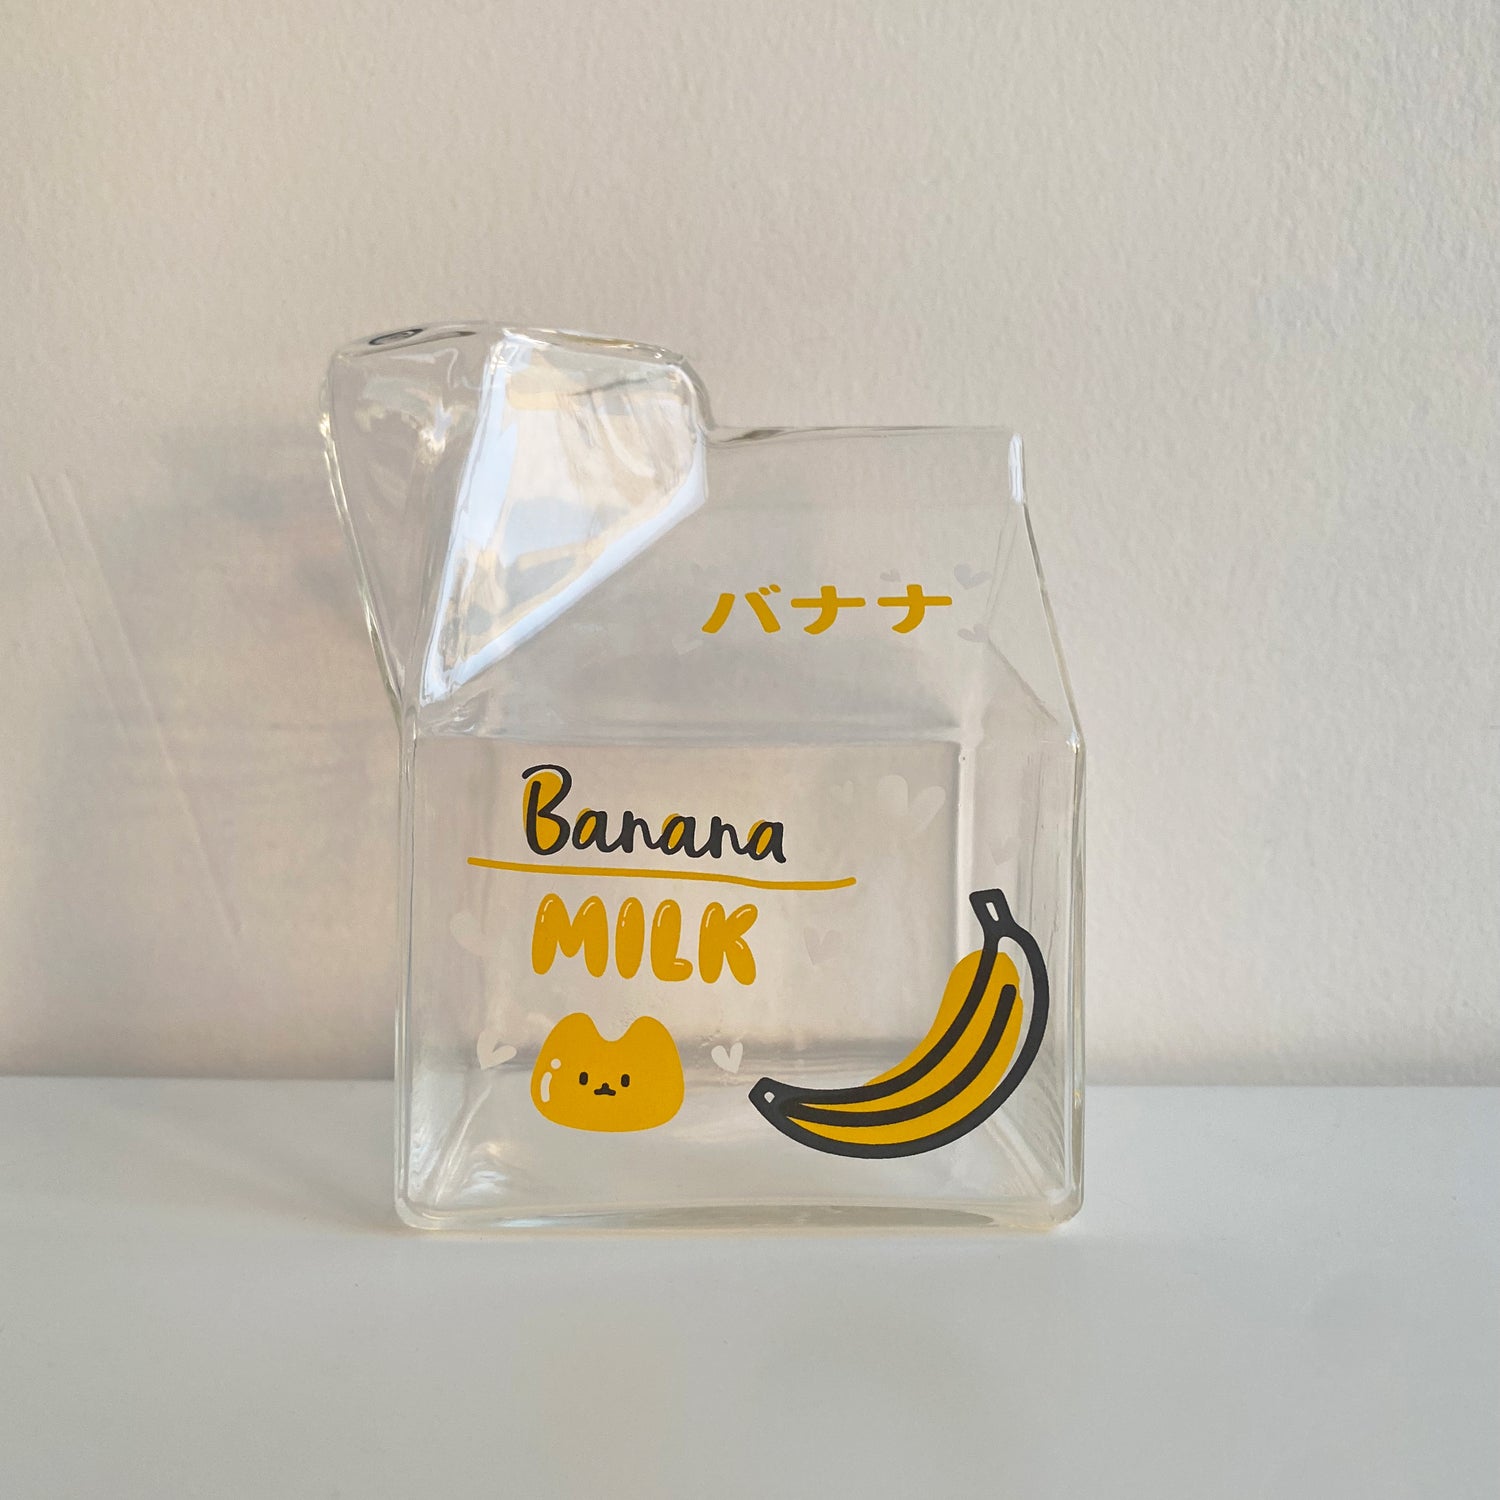 glass milk carton with cute banana design